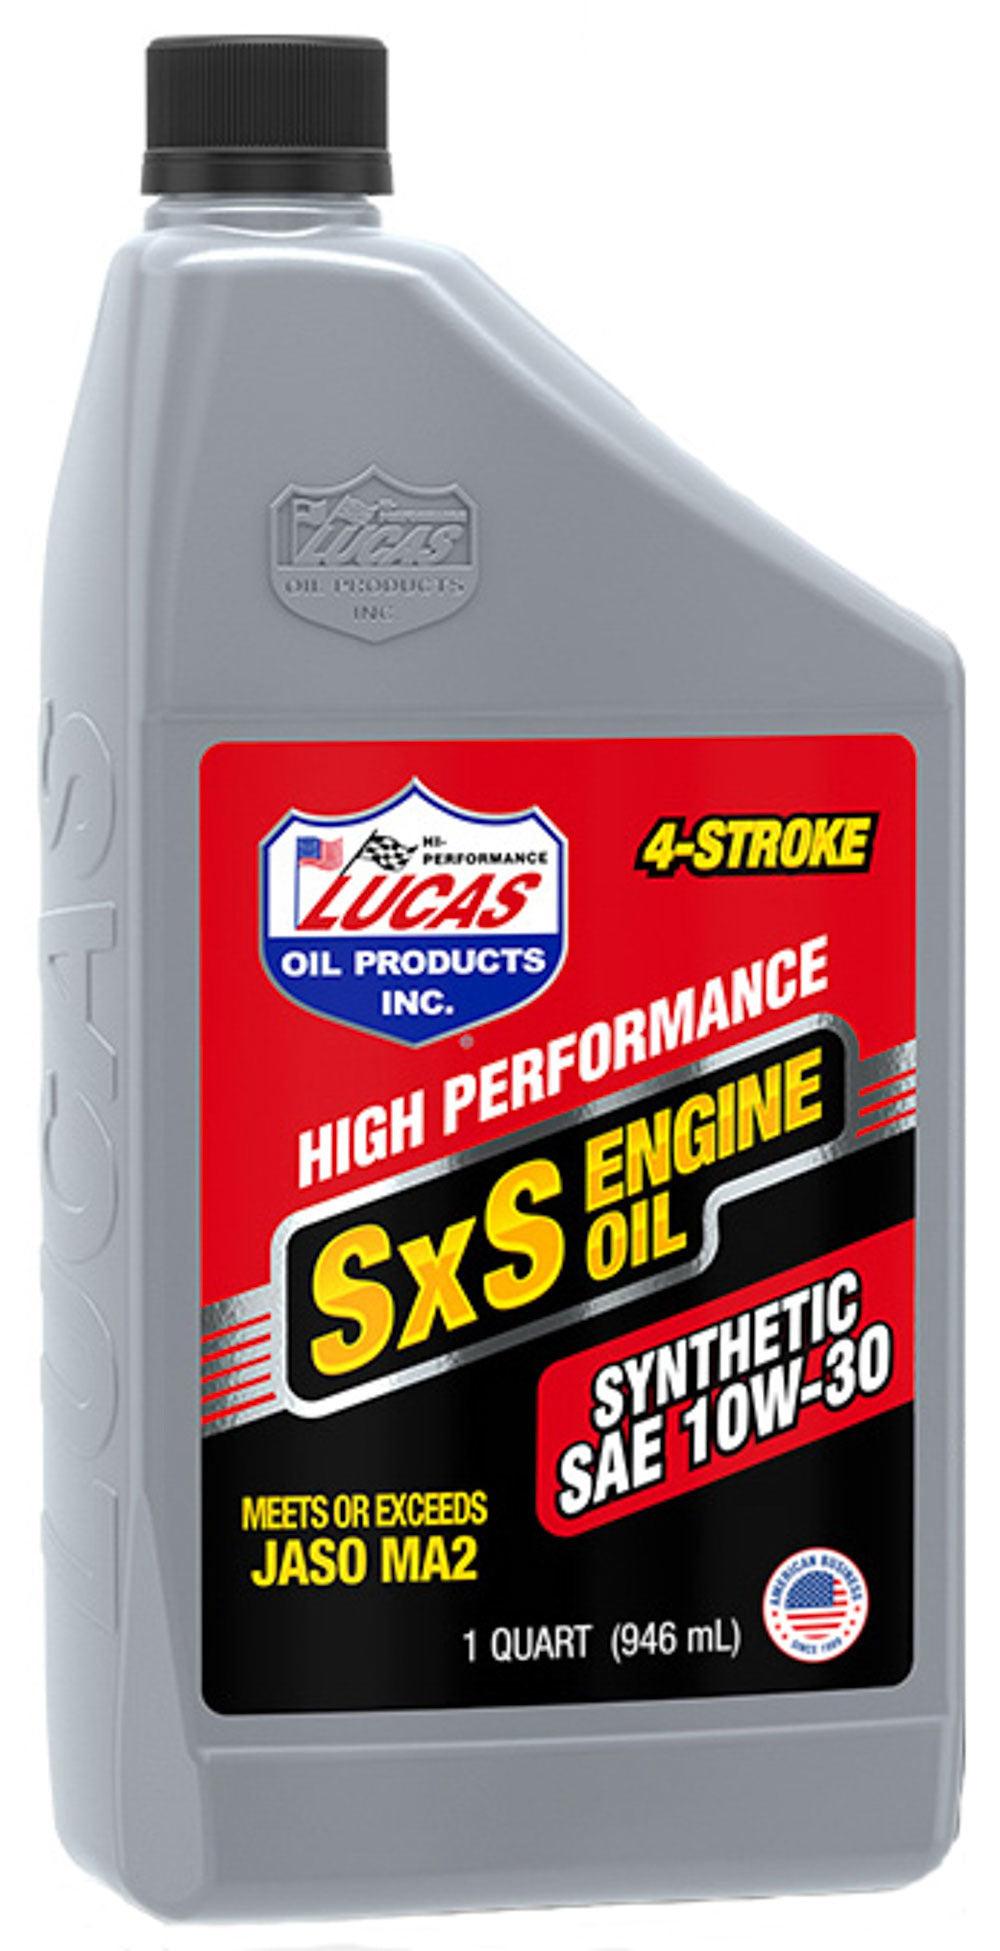 Synthetic 10w30 SXS Oil 1 Quart - Burlile Performance Products